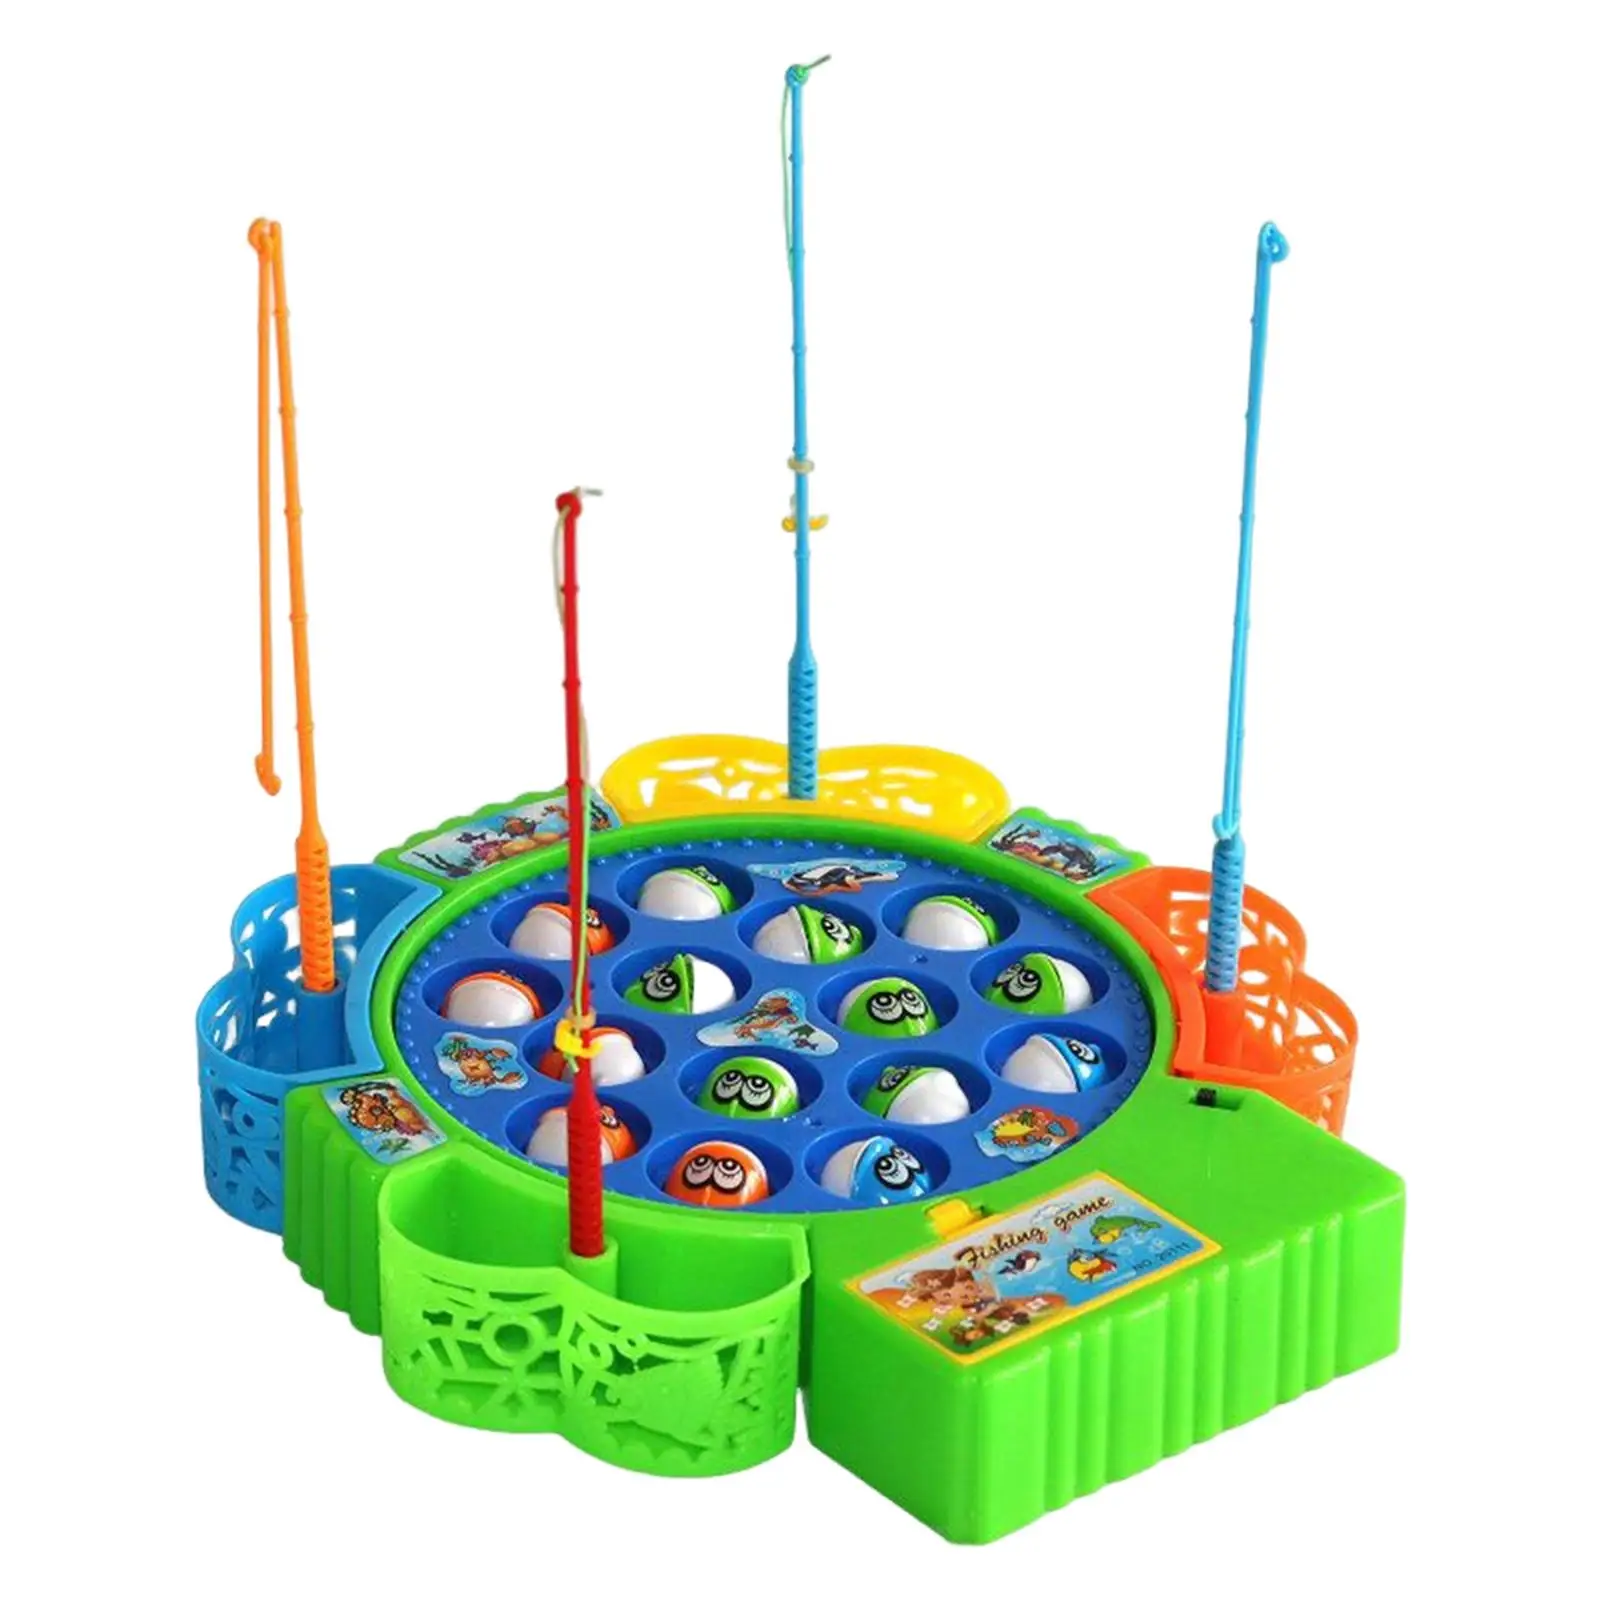 Montessori Rotating Fishing Game Kids Toy Ability training, board Game Fine Motor skill Educational Toy Preschool